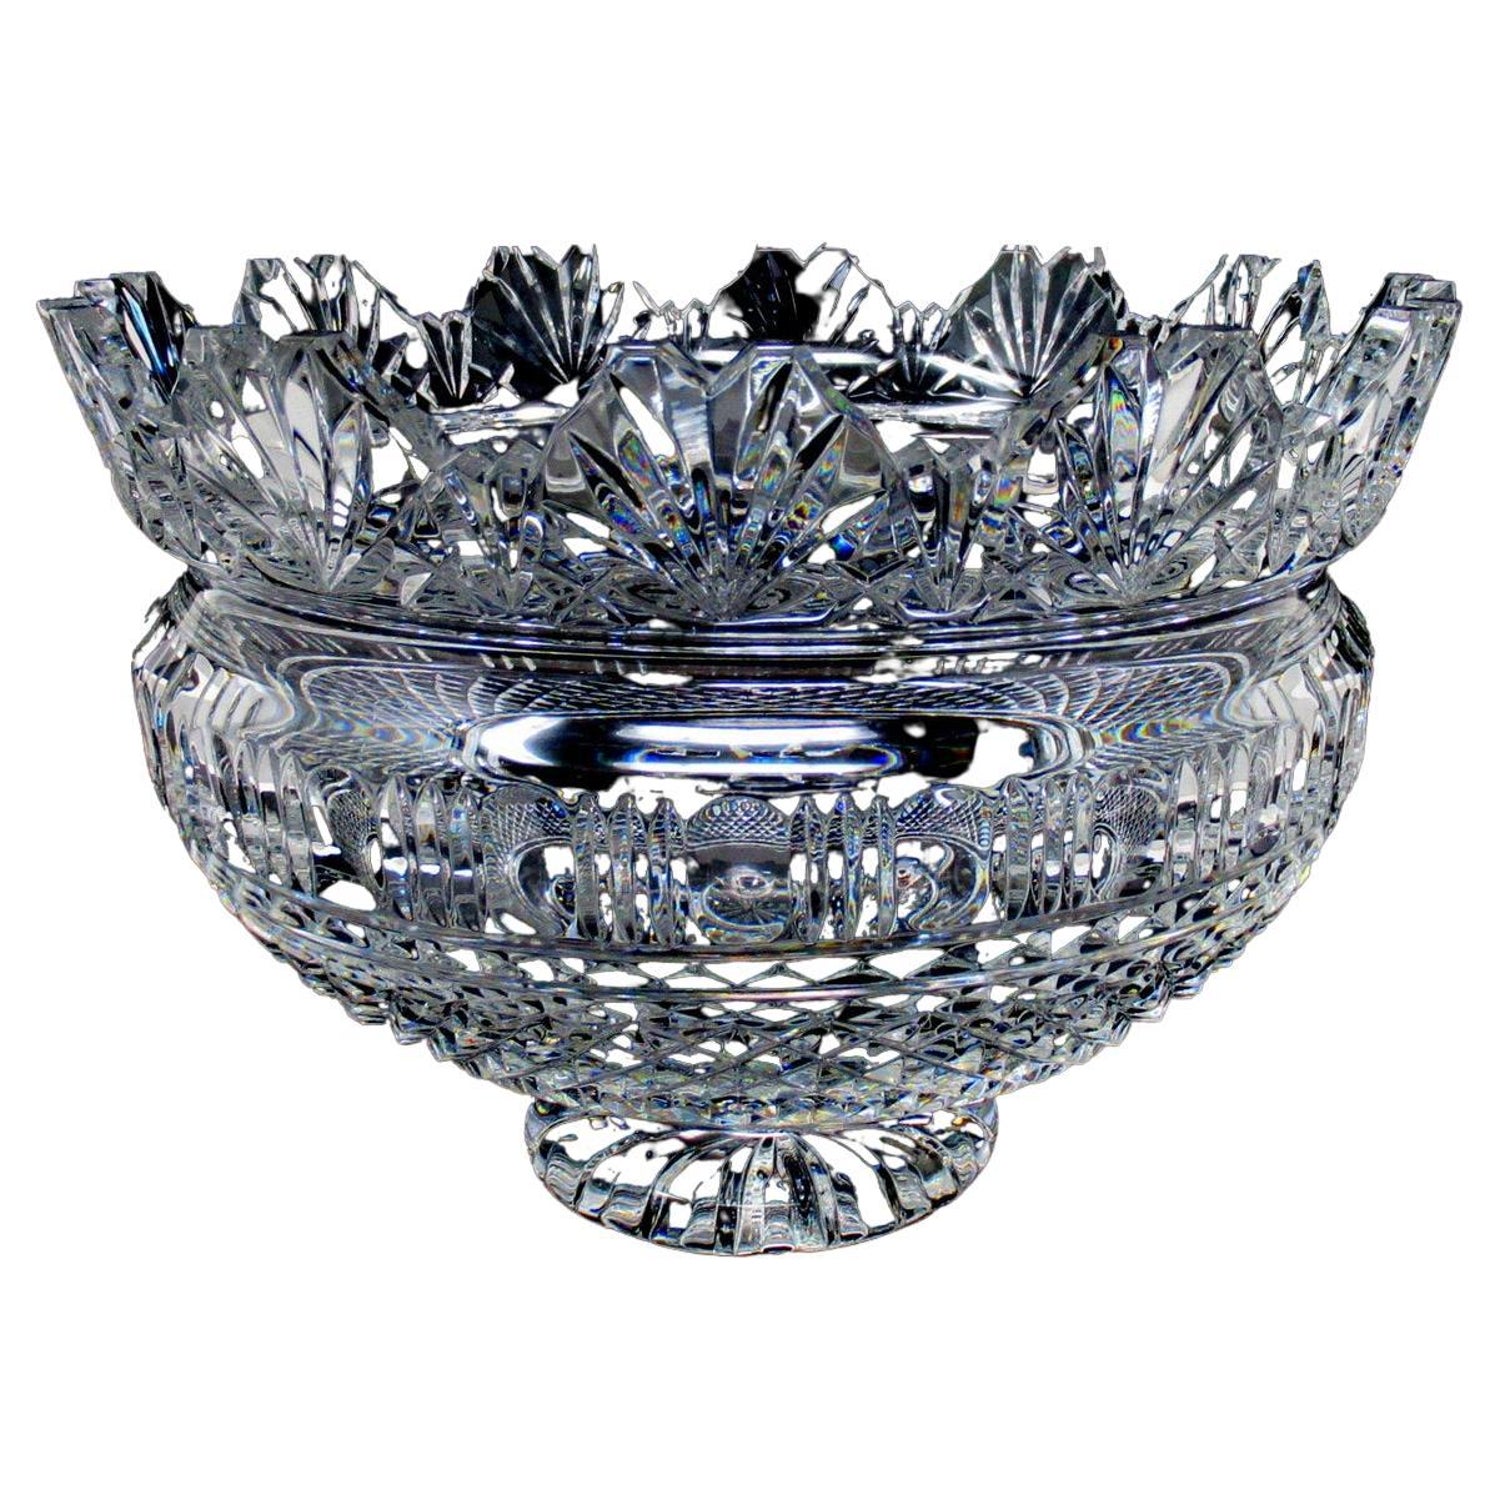 Vintage Waterford Crystal Bowls - 3 For Sale on 1stDibs